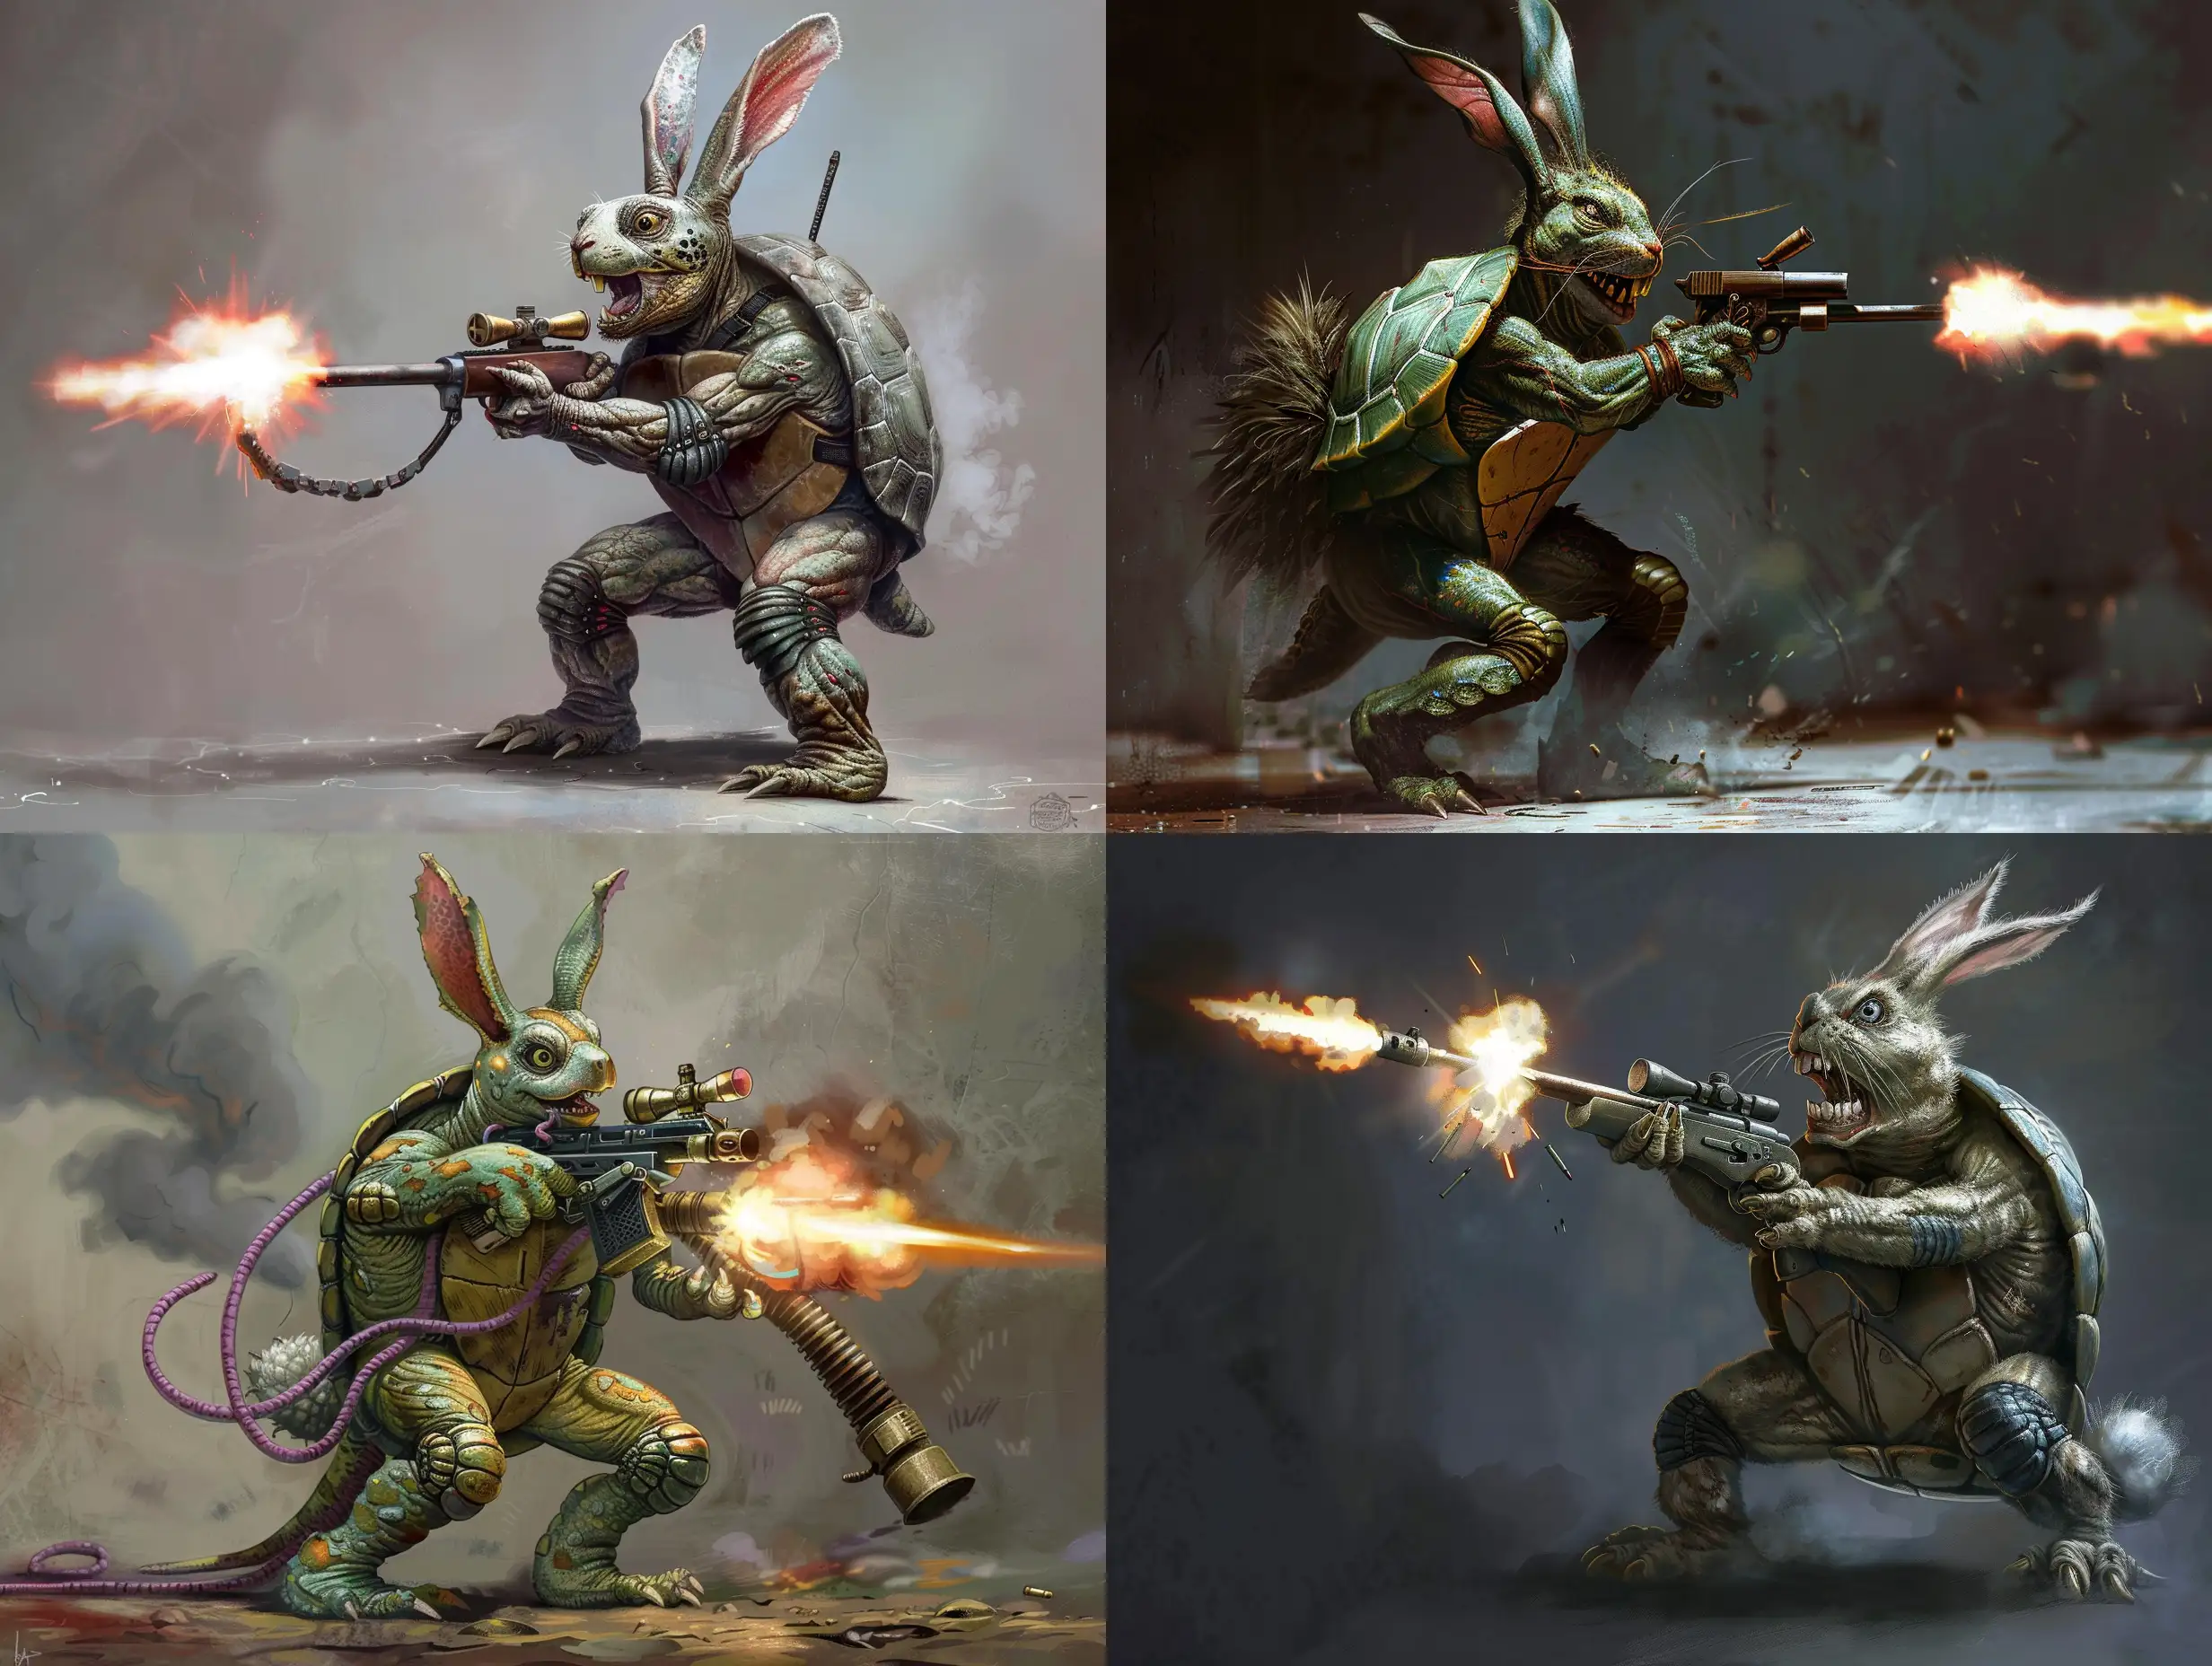 Mutant-TurtleRabbit-Wielding-Machine-Gun-in-Ferocious-Combat